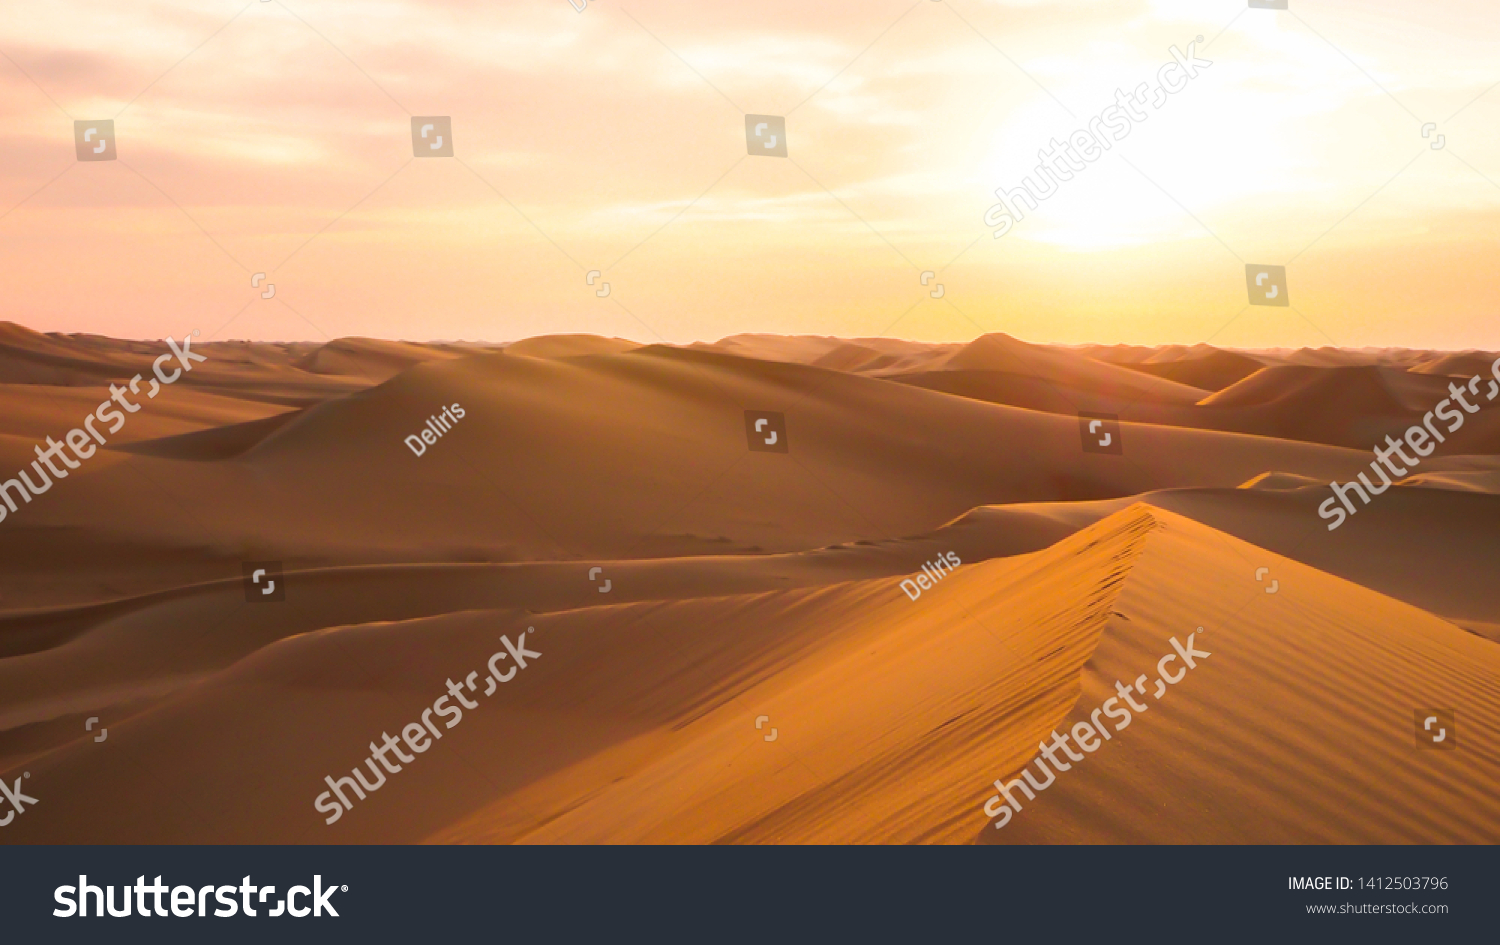 Amazing desert sunset. Beautiful Arabian desert with warm colors. Colorful contours of sand dunes at Abu Dhabi.  #1412503796